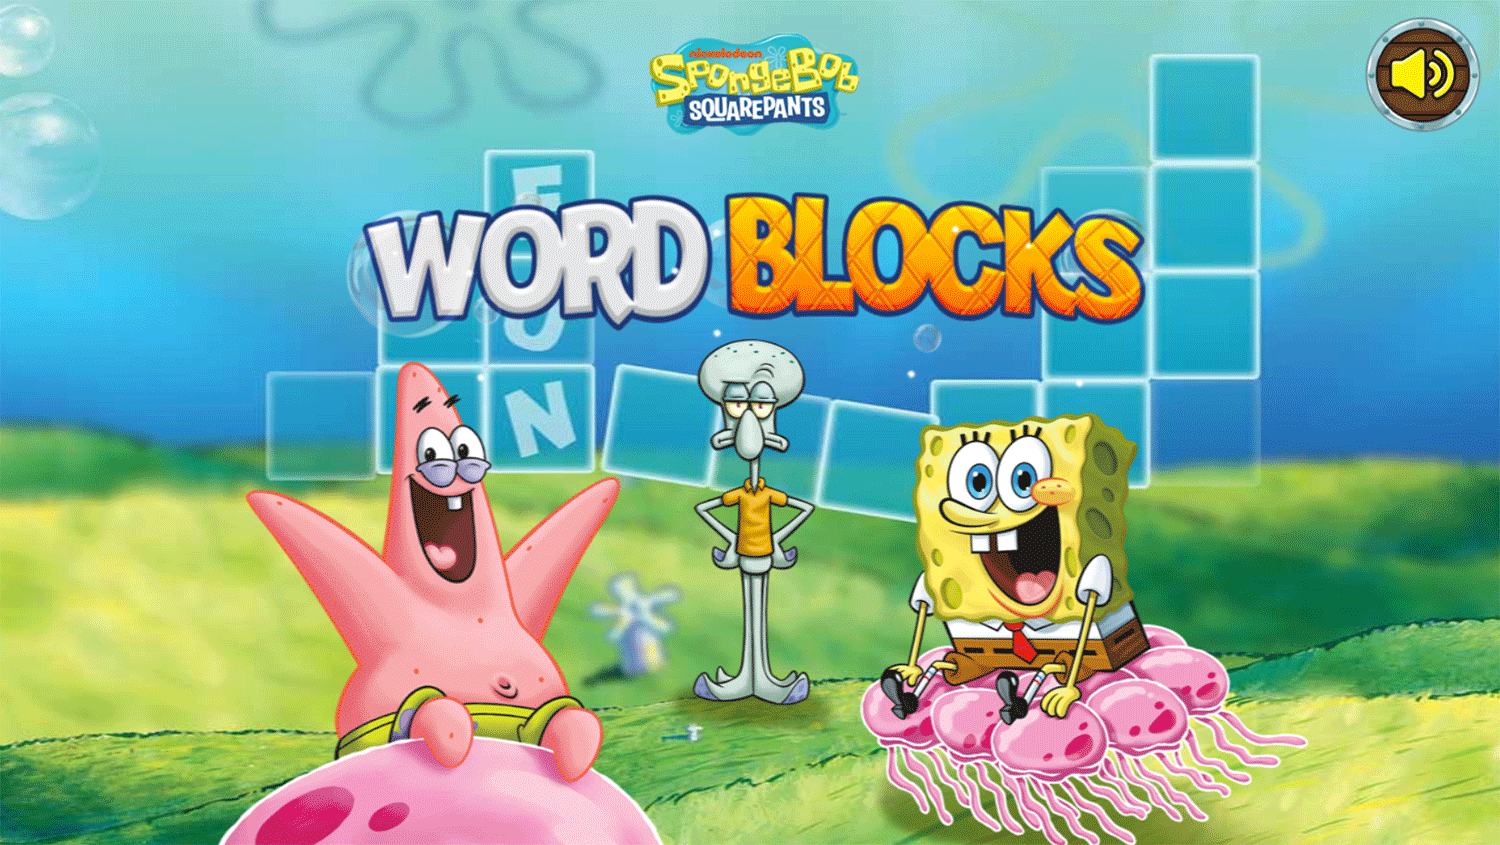 Spongebob Squarepants Word Blocks Welcome Screen Screenshot.